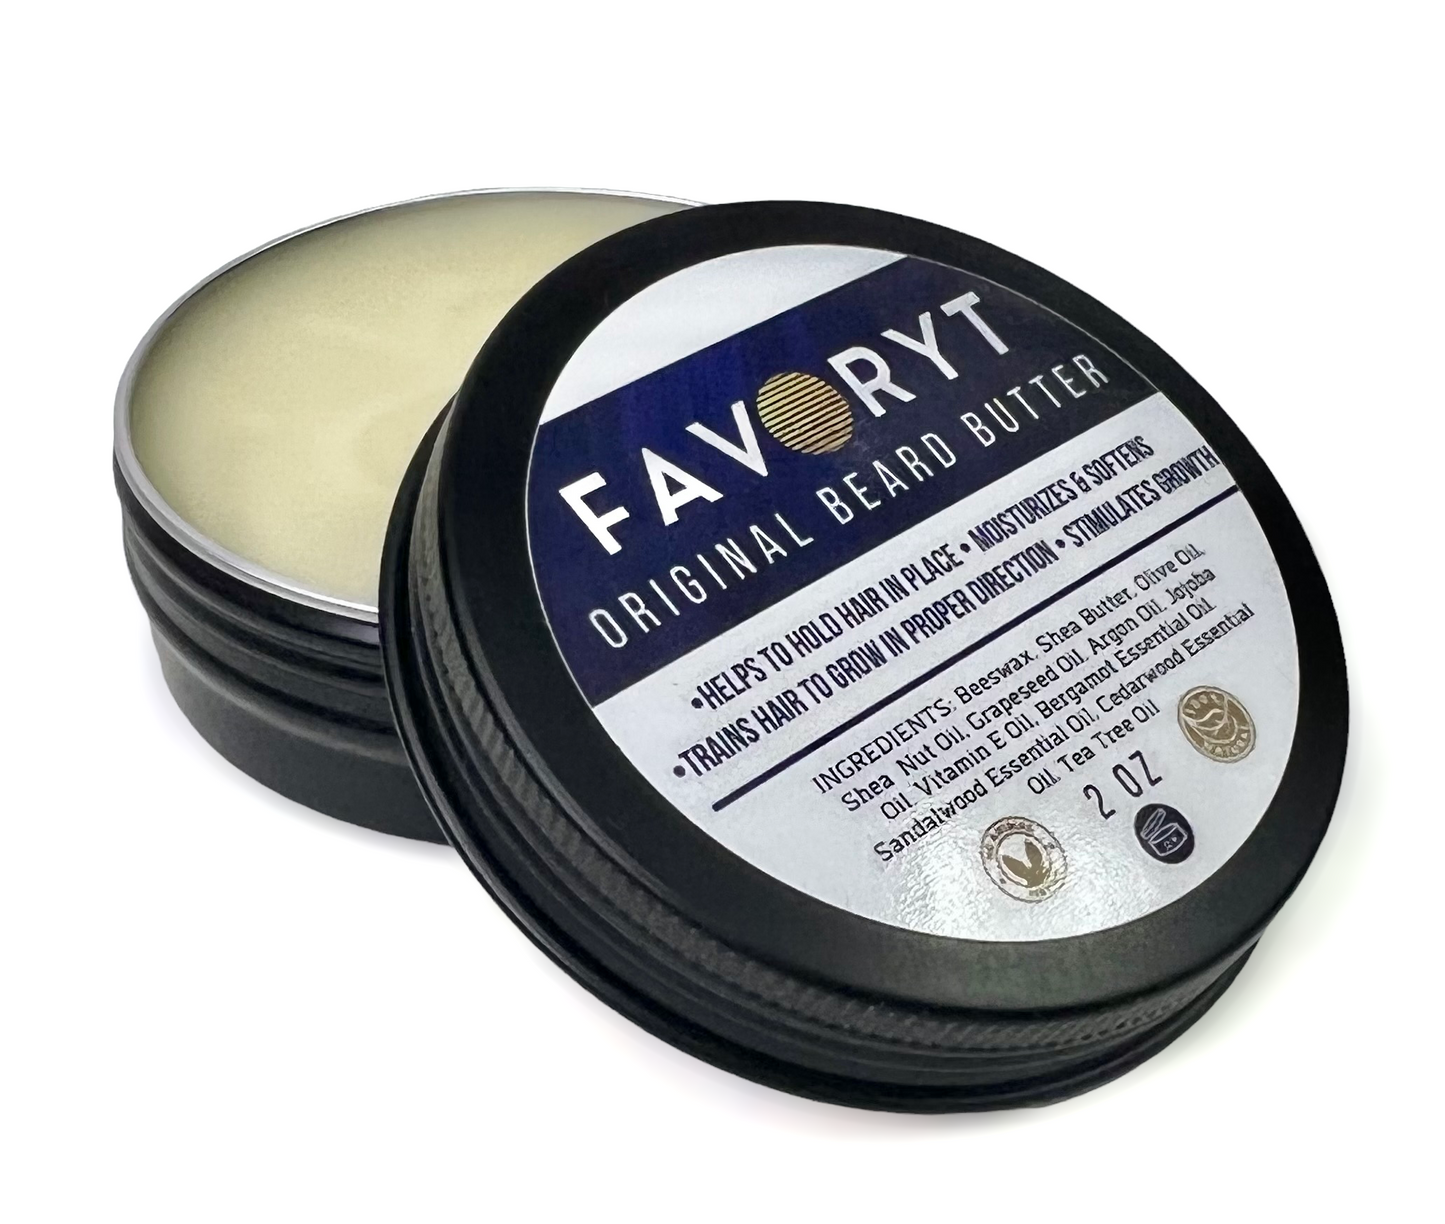 FAVORYT Original Beard Butter - FAVORYT BRAND